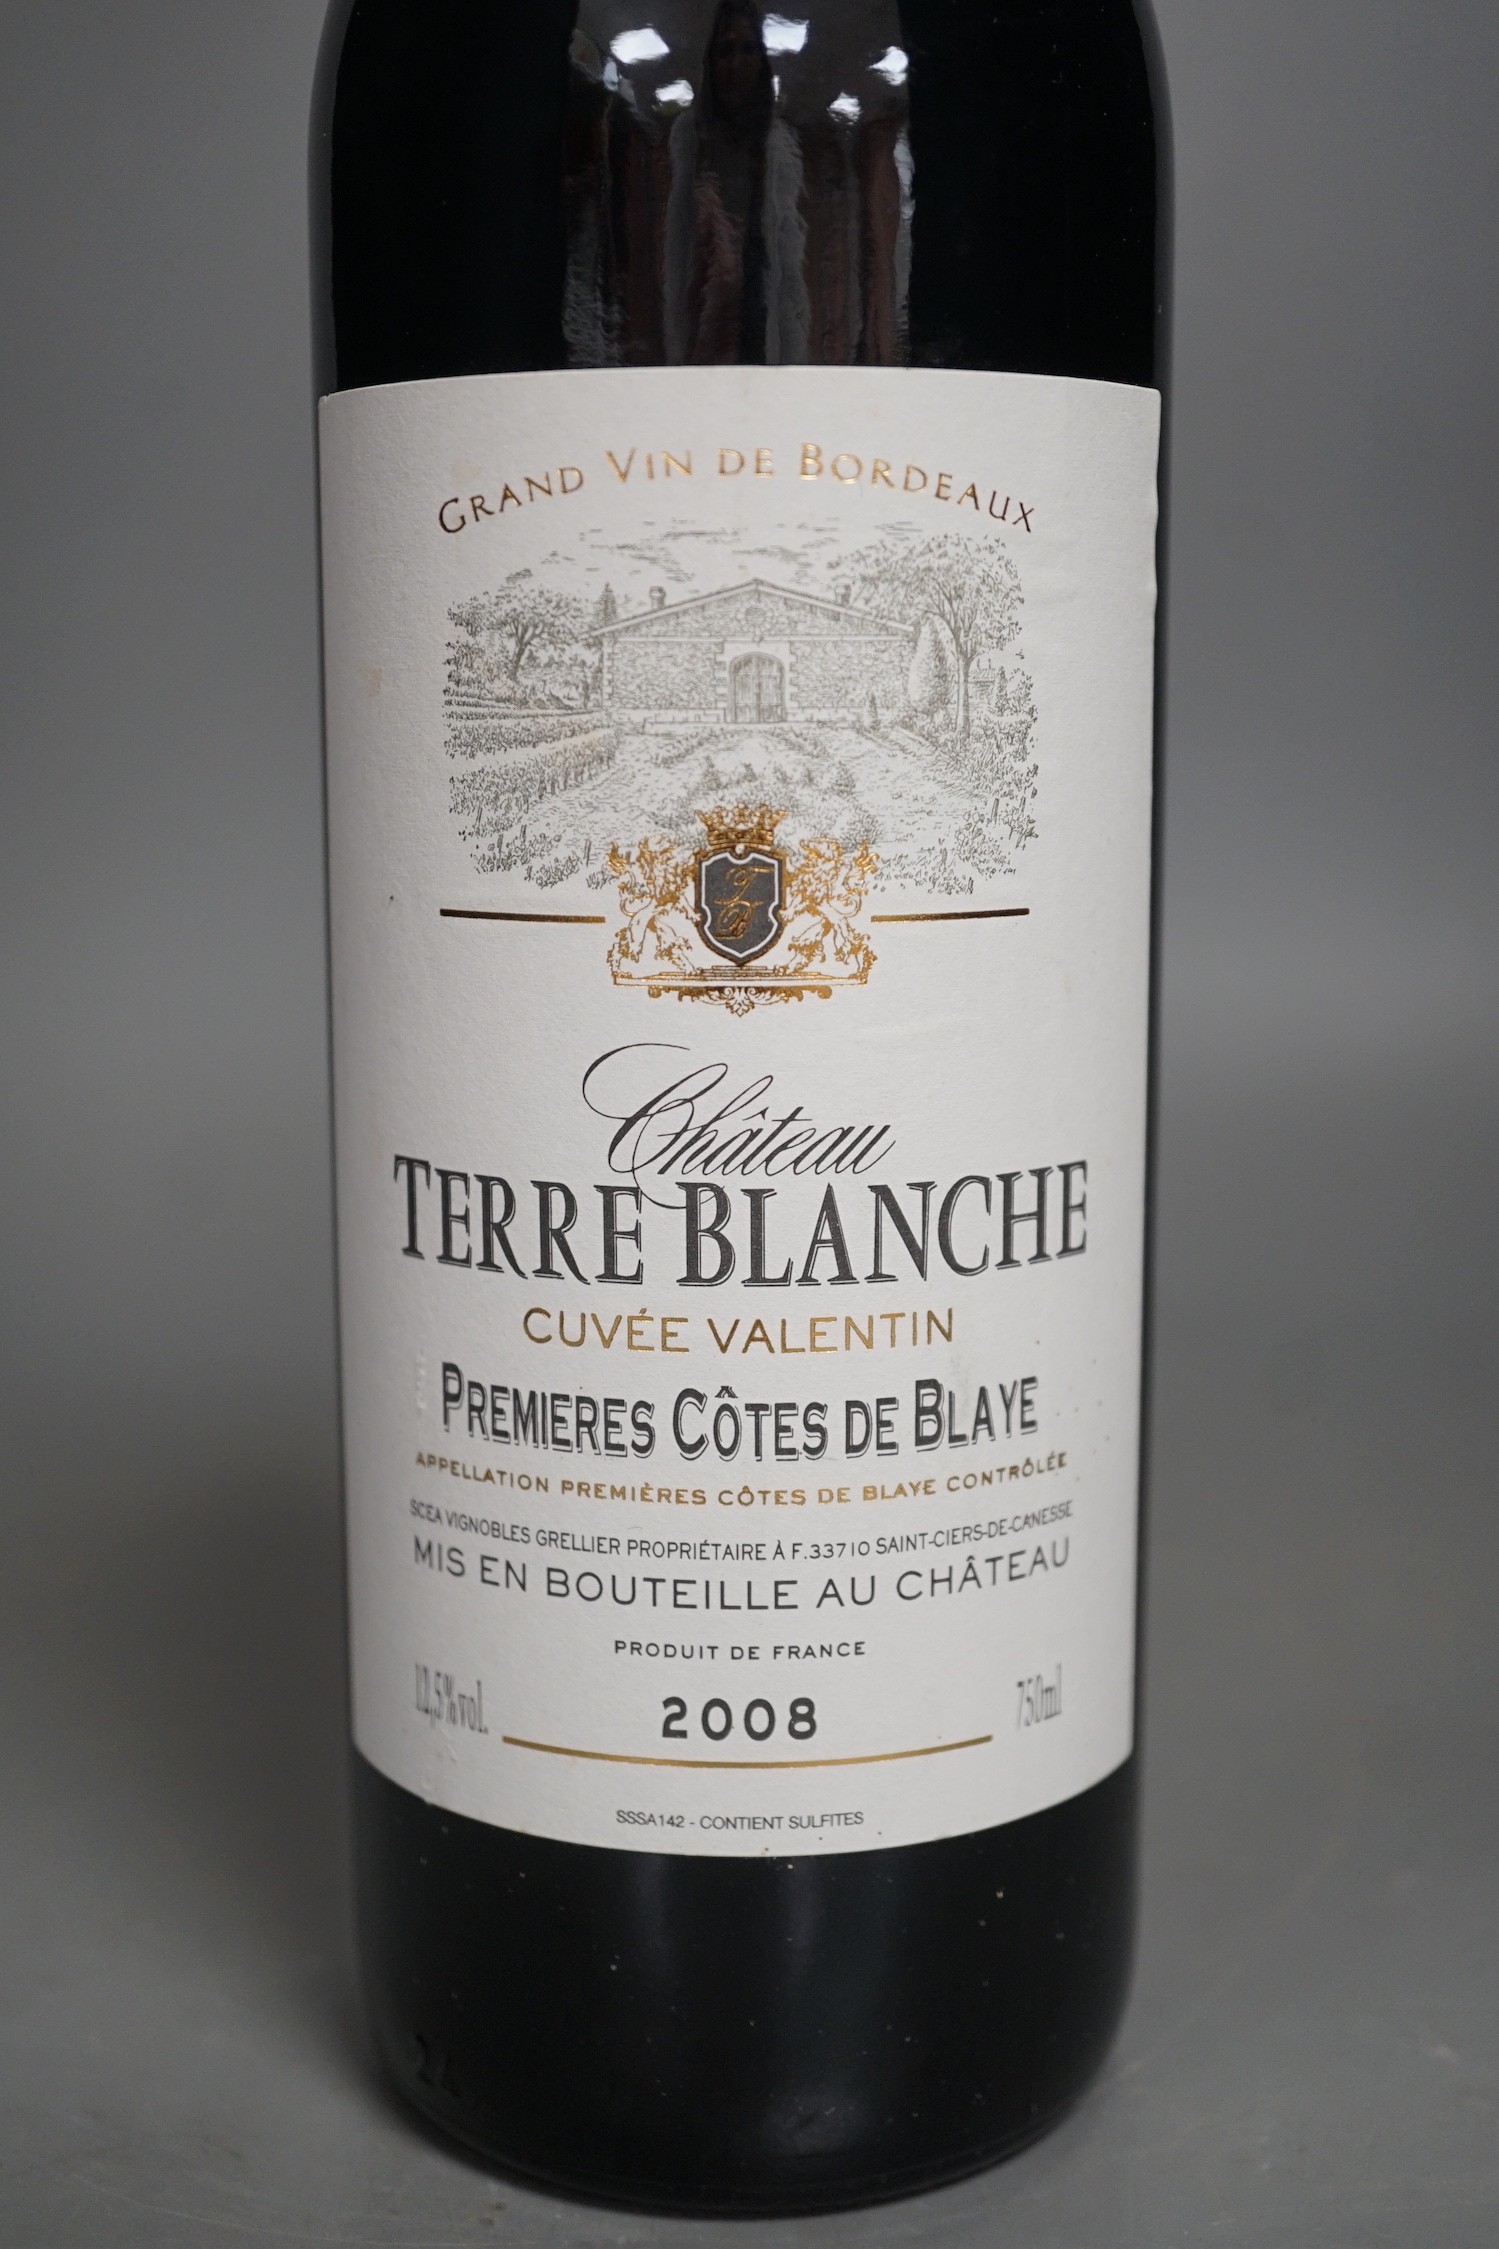 Twelve bottles of Chateau Terr-Blanche 